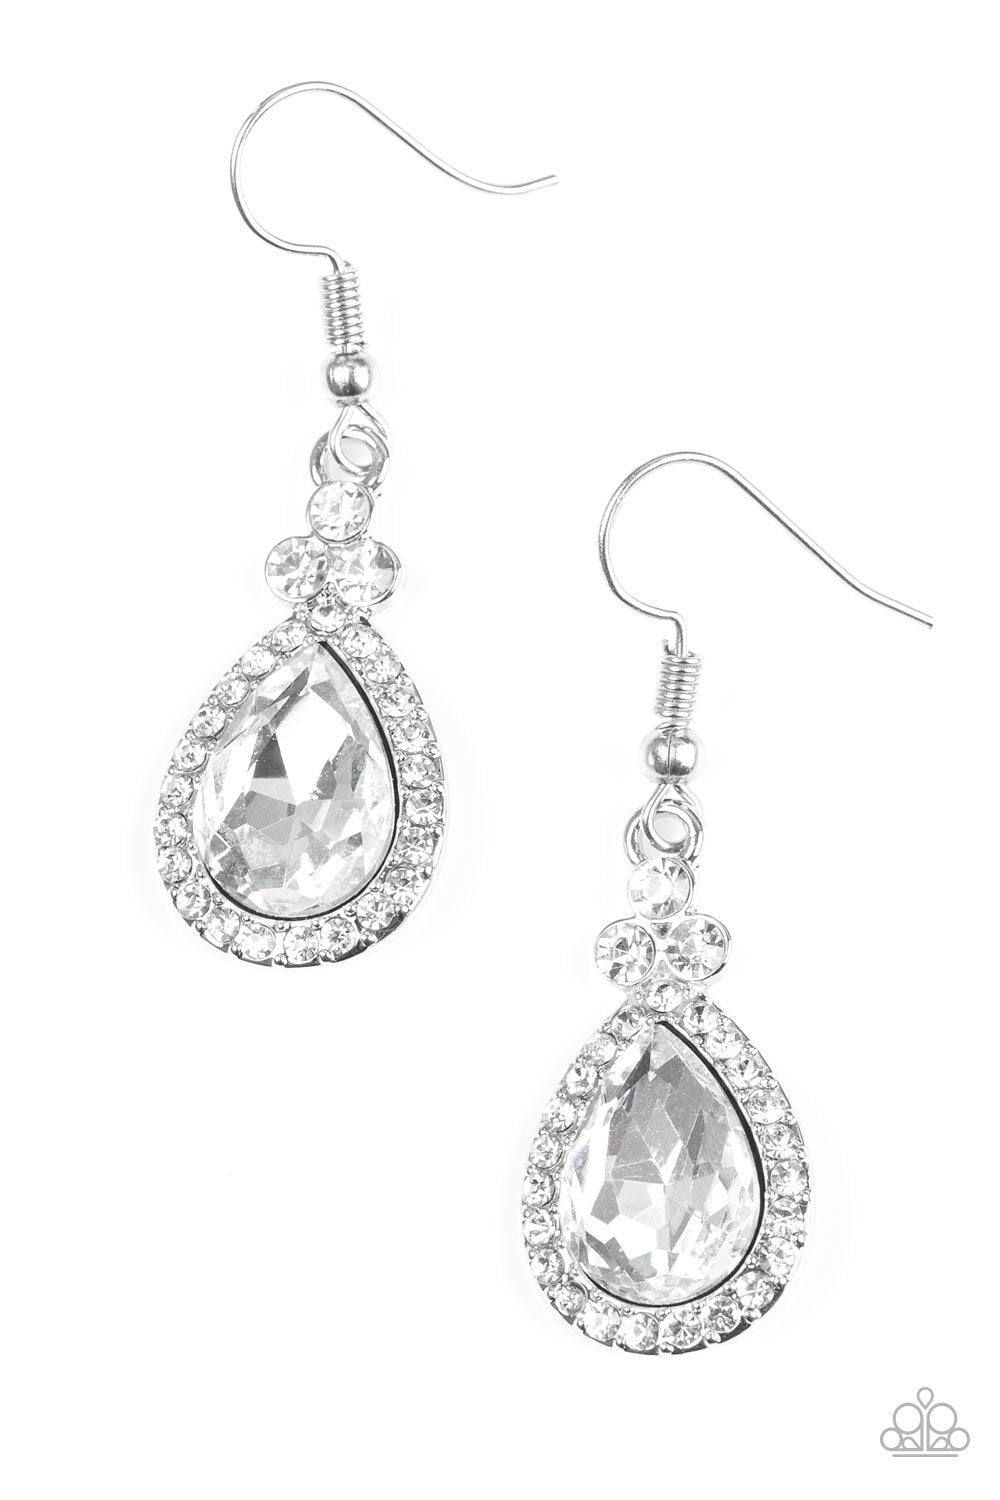 Self-Made Millionaire White Teardrop Rhinestone Earrings - Paparazzi Accessories-CarasShop.com - $5 Jewelry by Cara Jewels